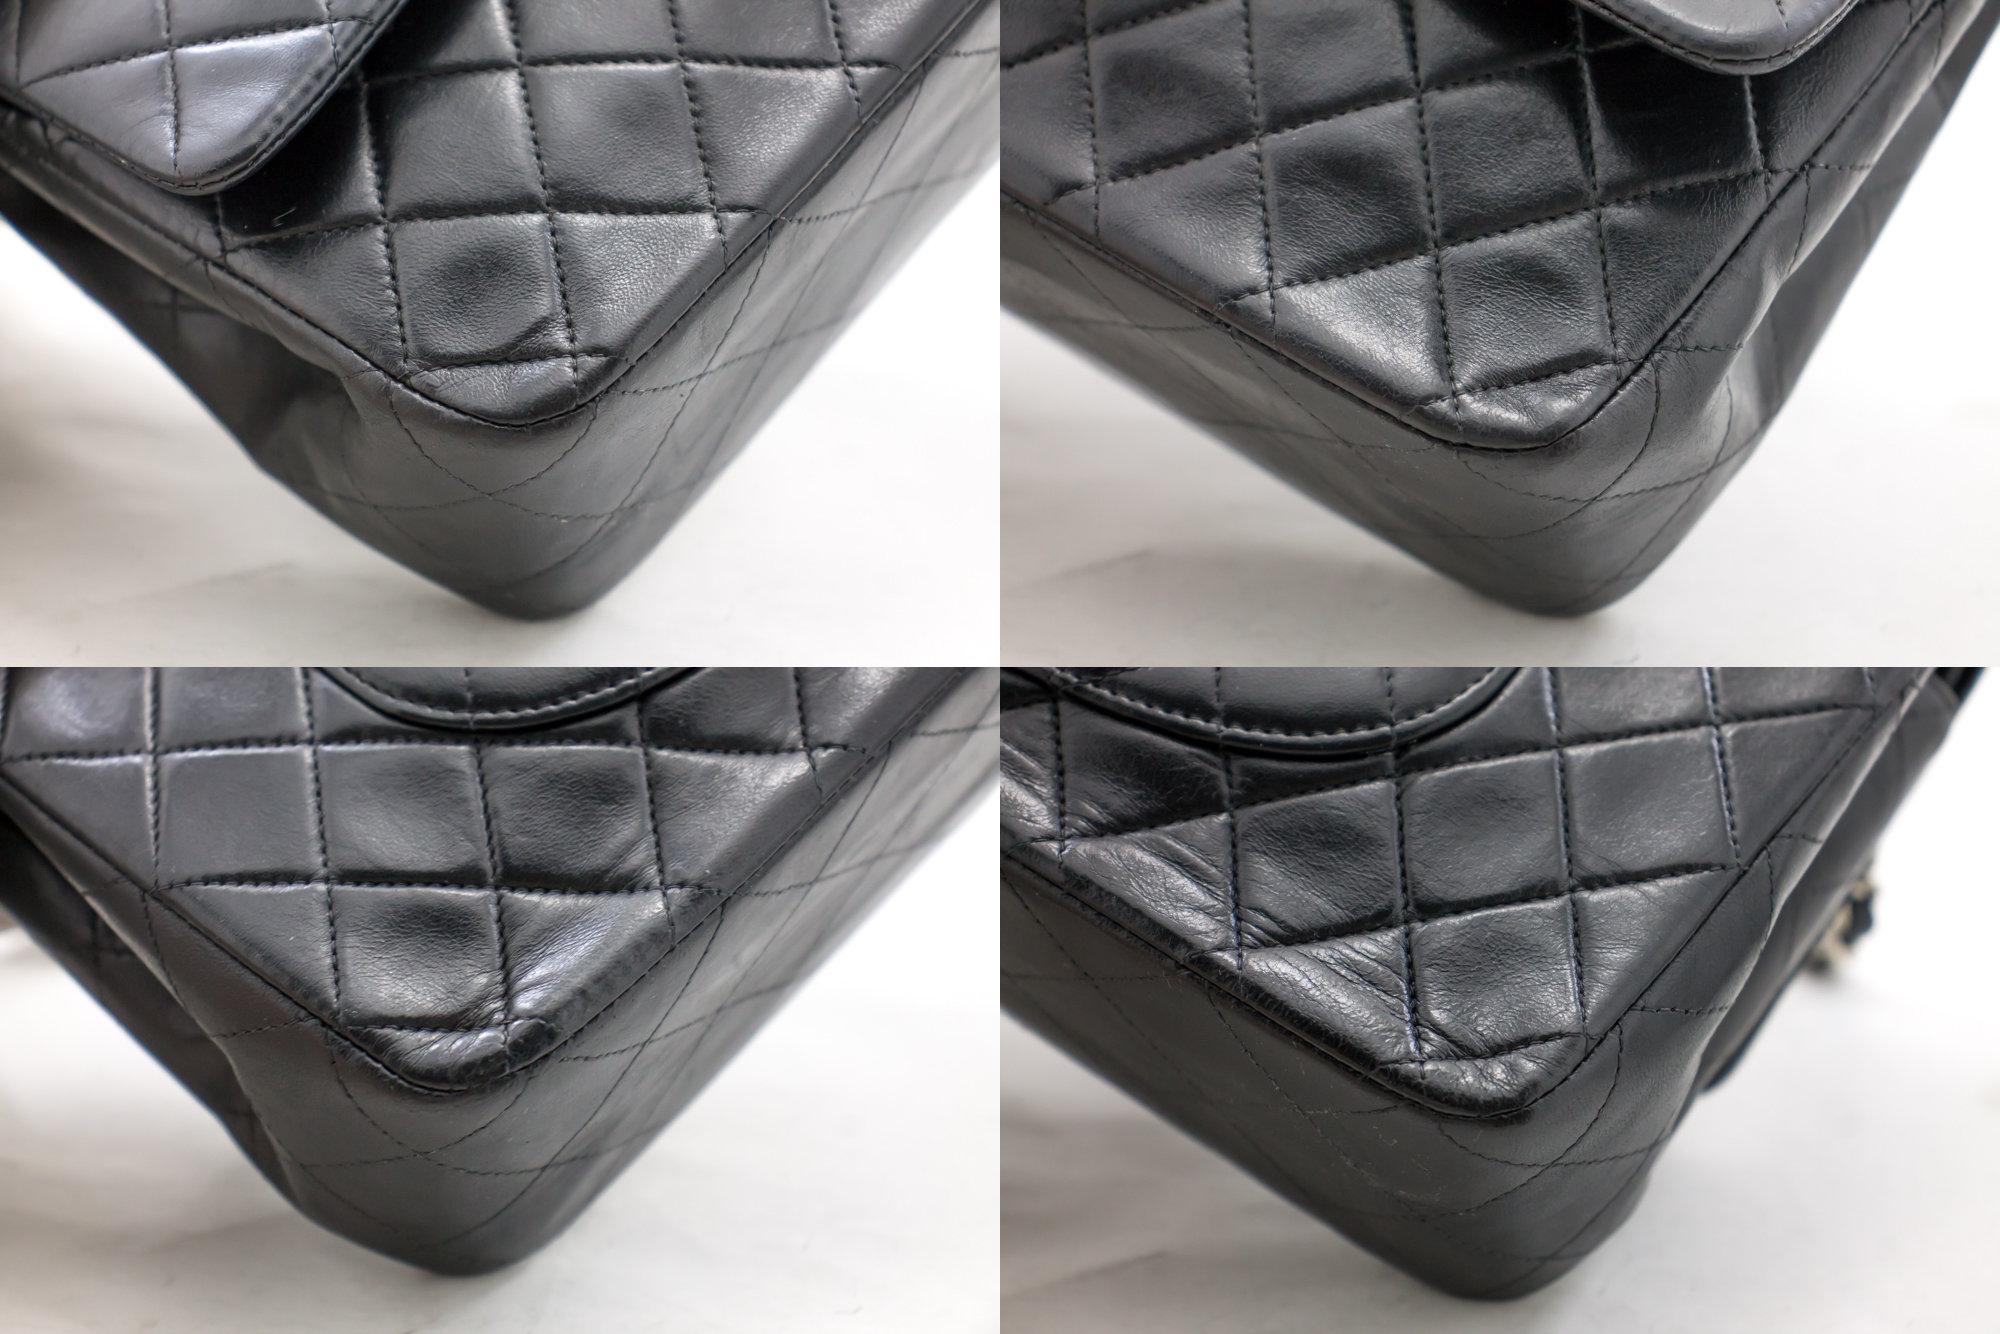 CHANEL 2.55 Double Flap Medium Silver Chain Shoulder Bag Black 1